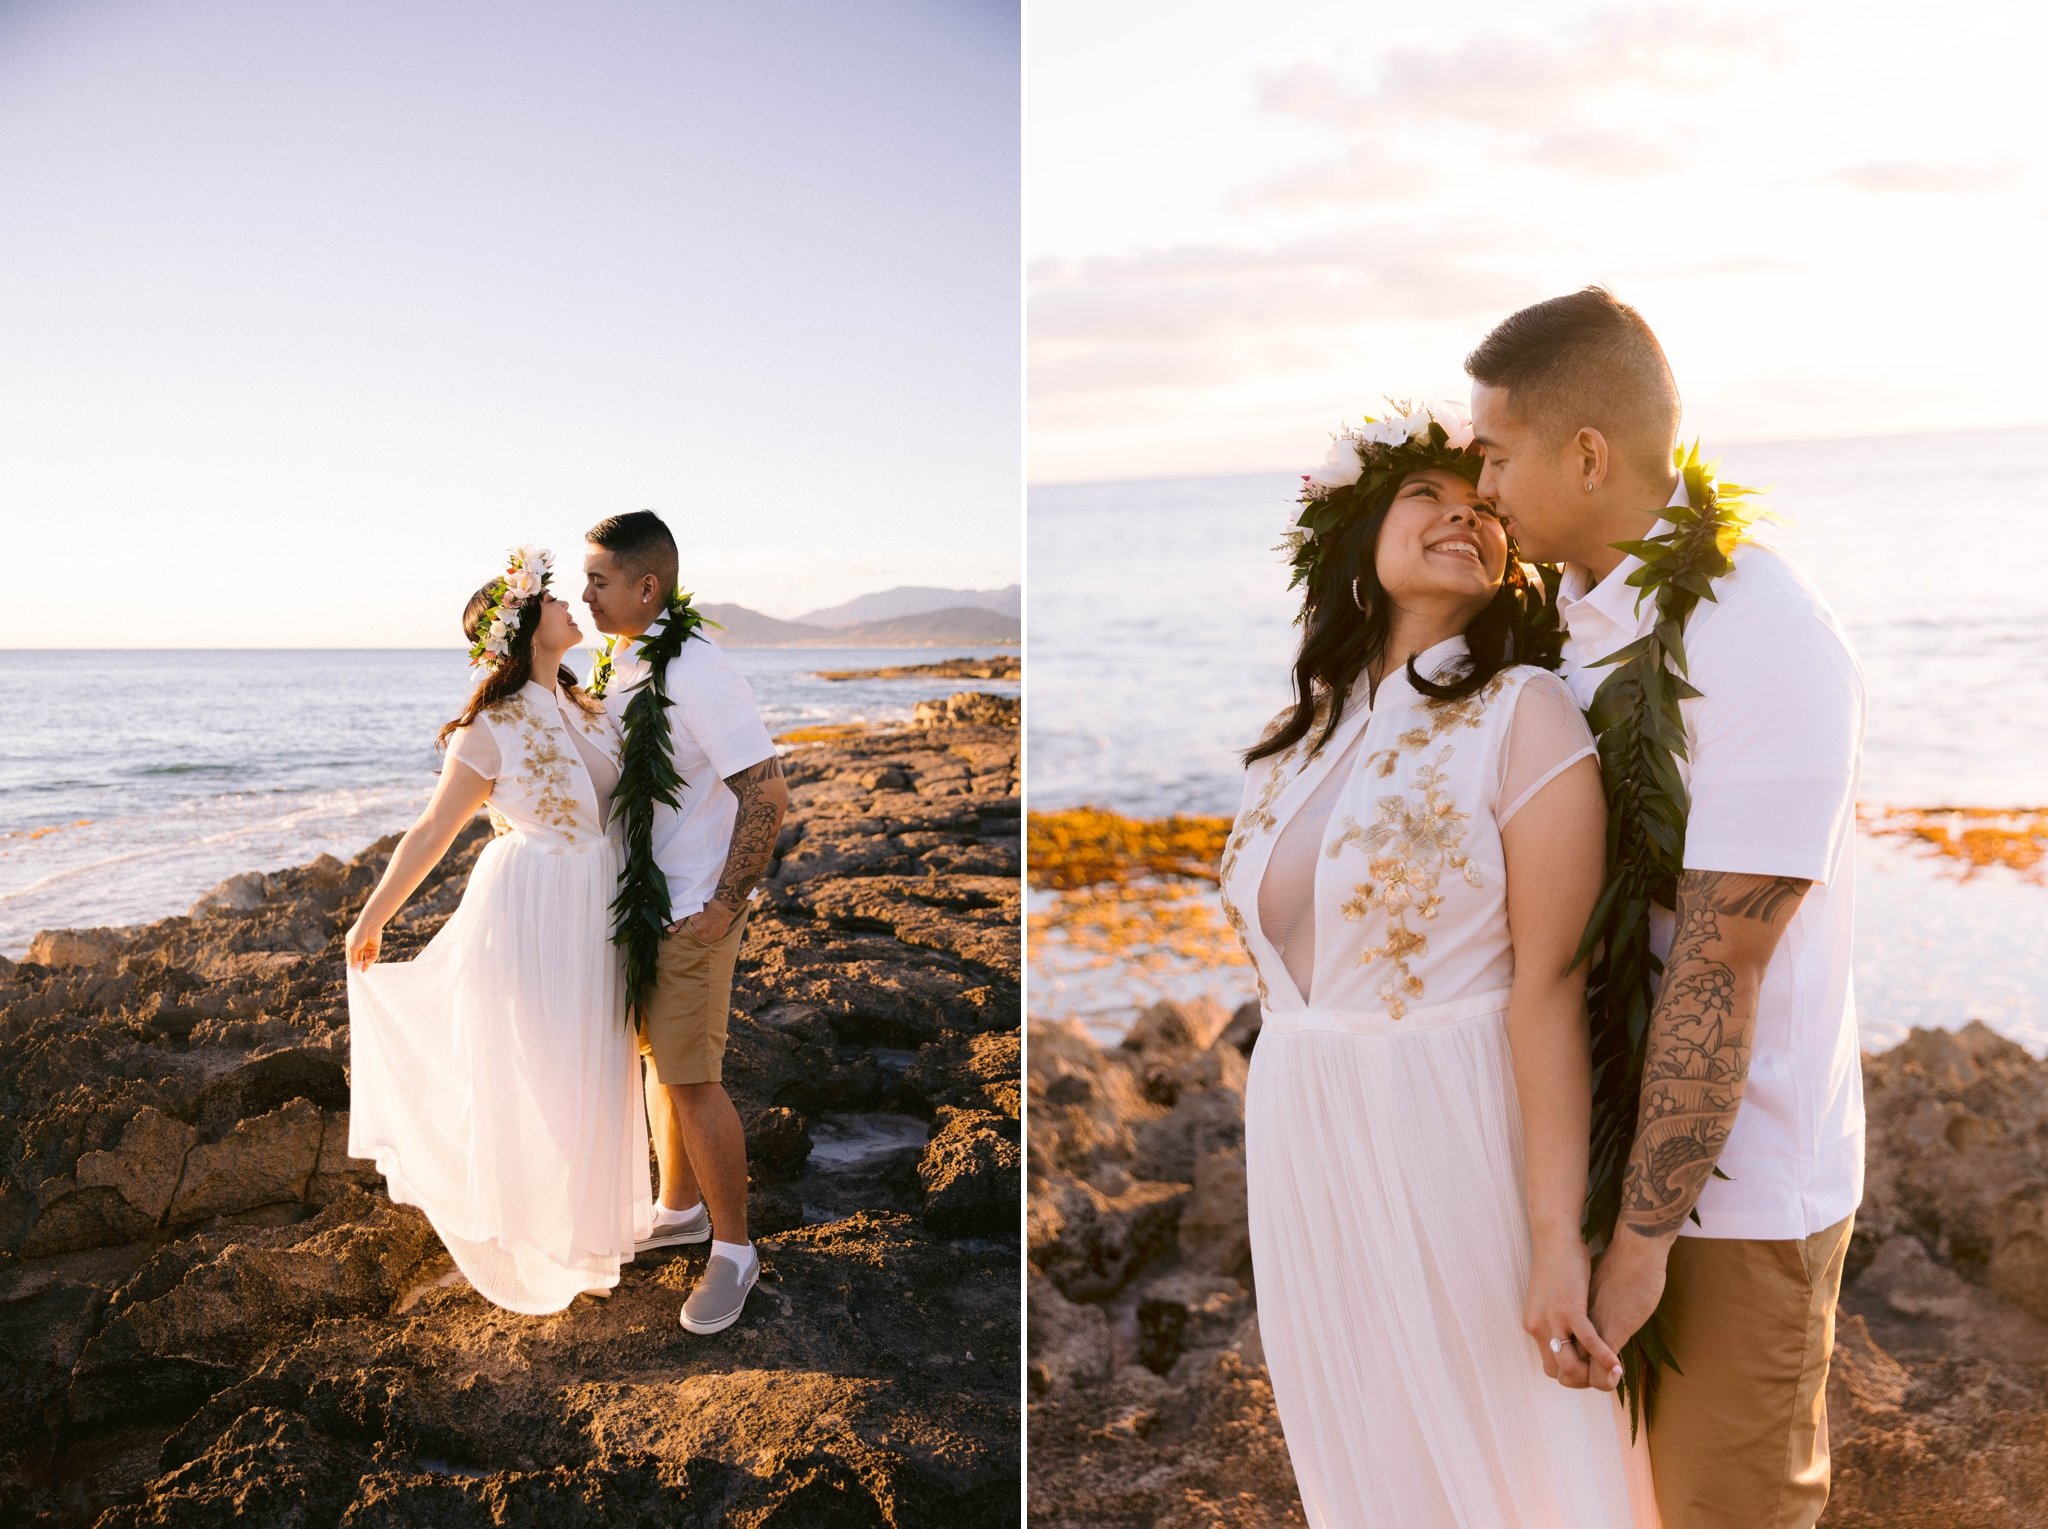 Ko Olina Secret Beach Engagement Session - Oahu, Hawaii Photographer 